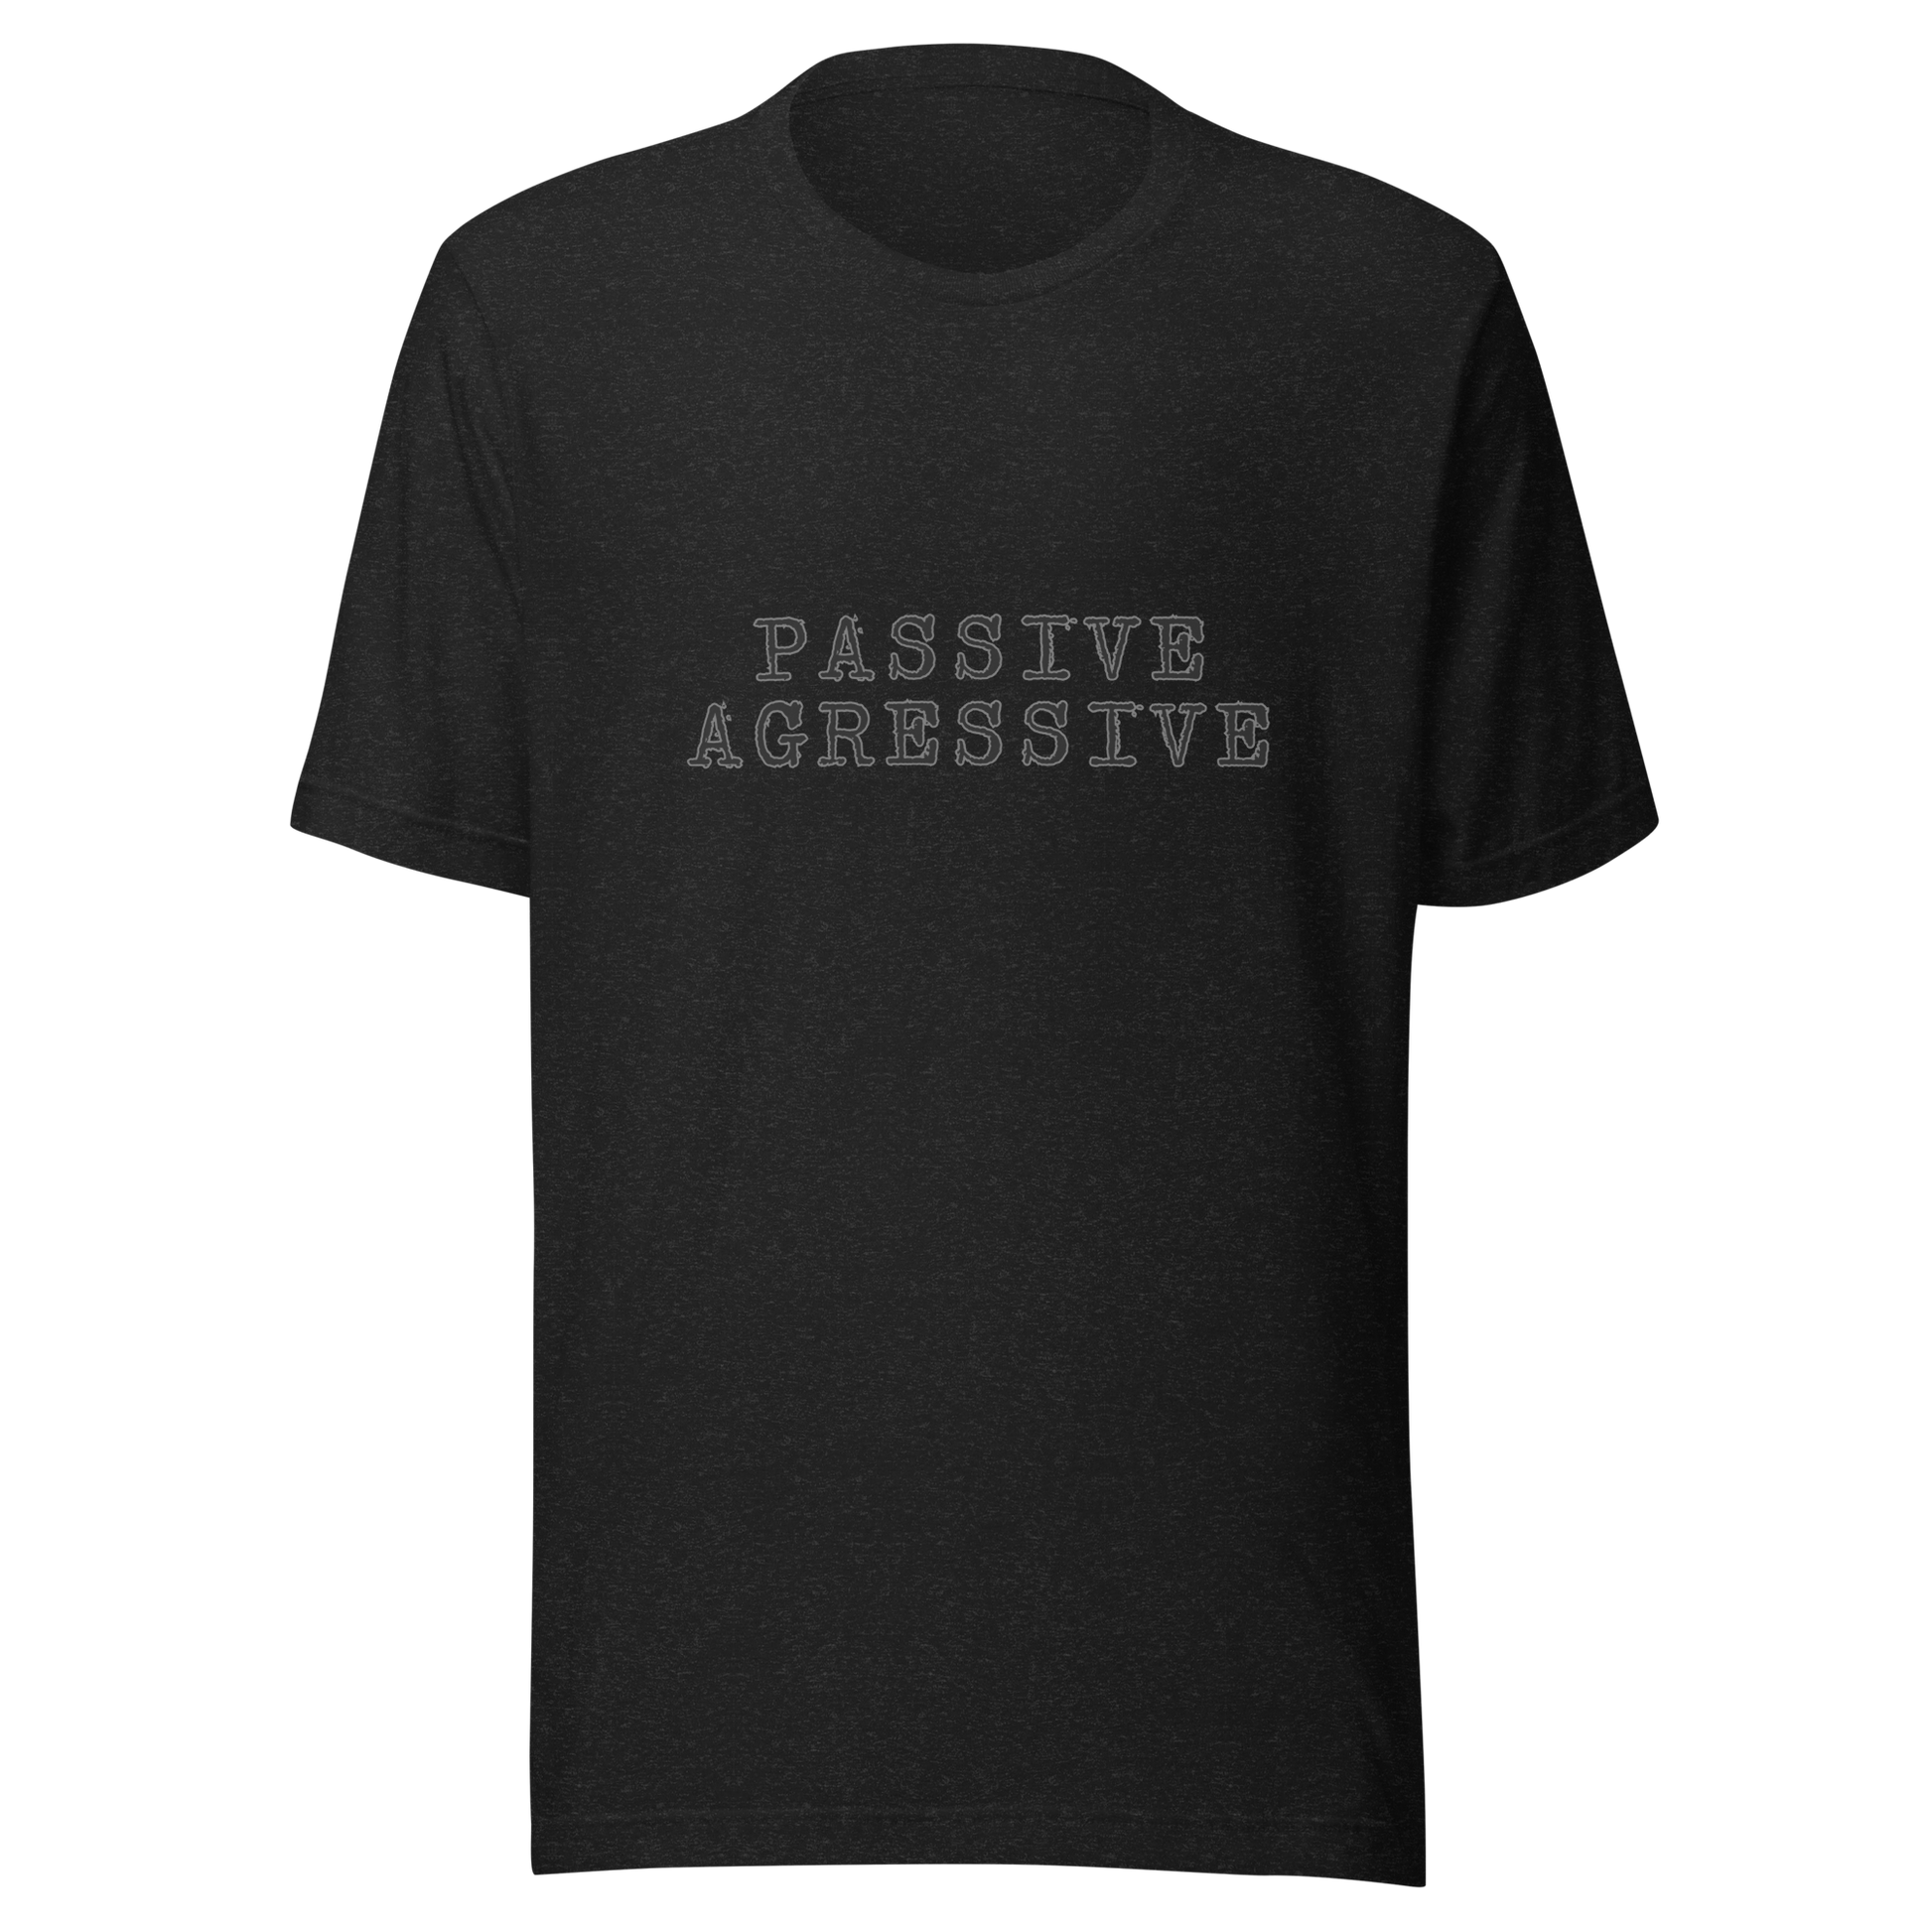 passive aggressive t-shirt in black - gaslit apparel